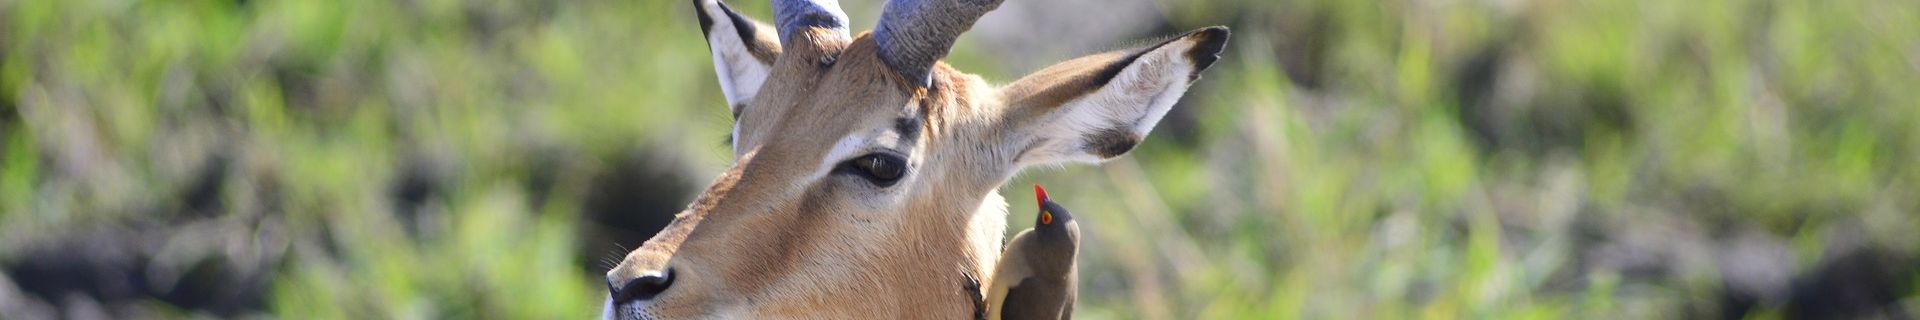 Symbiosis antelope and bird in Tanzania